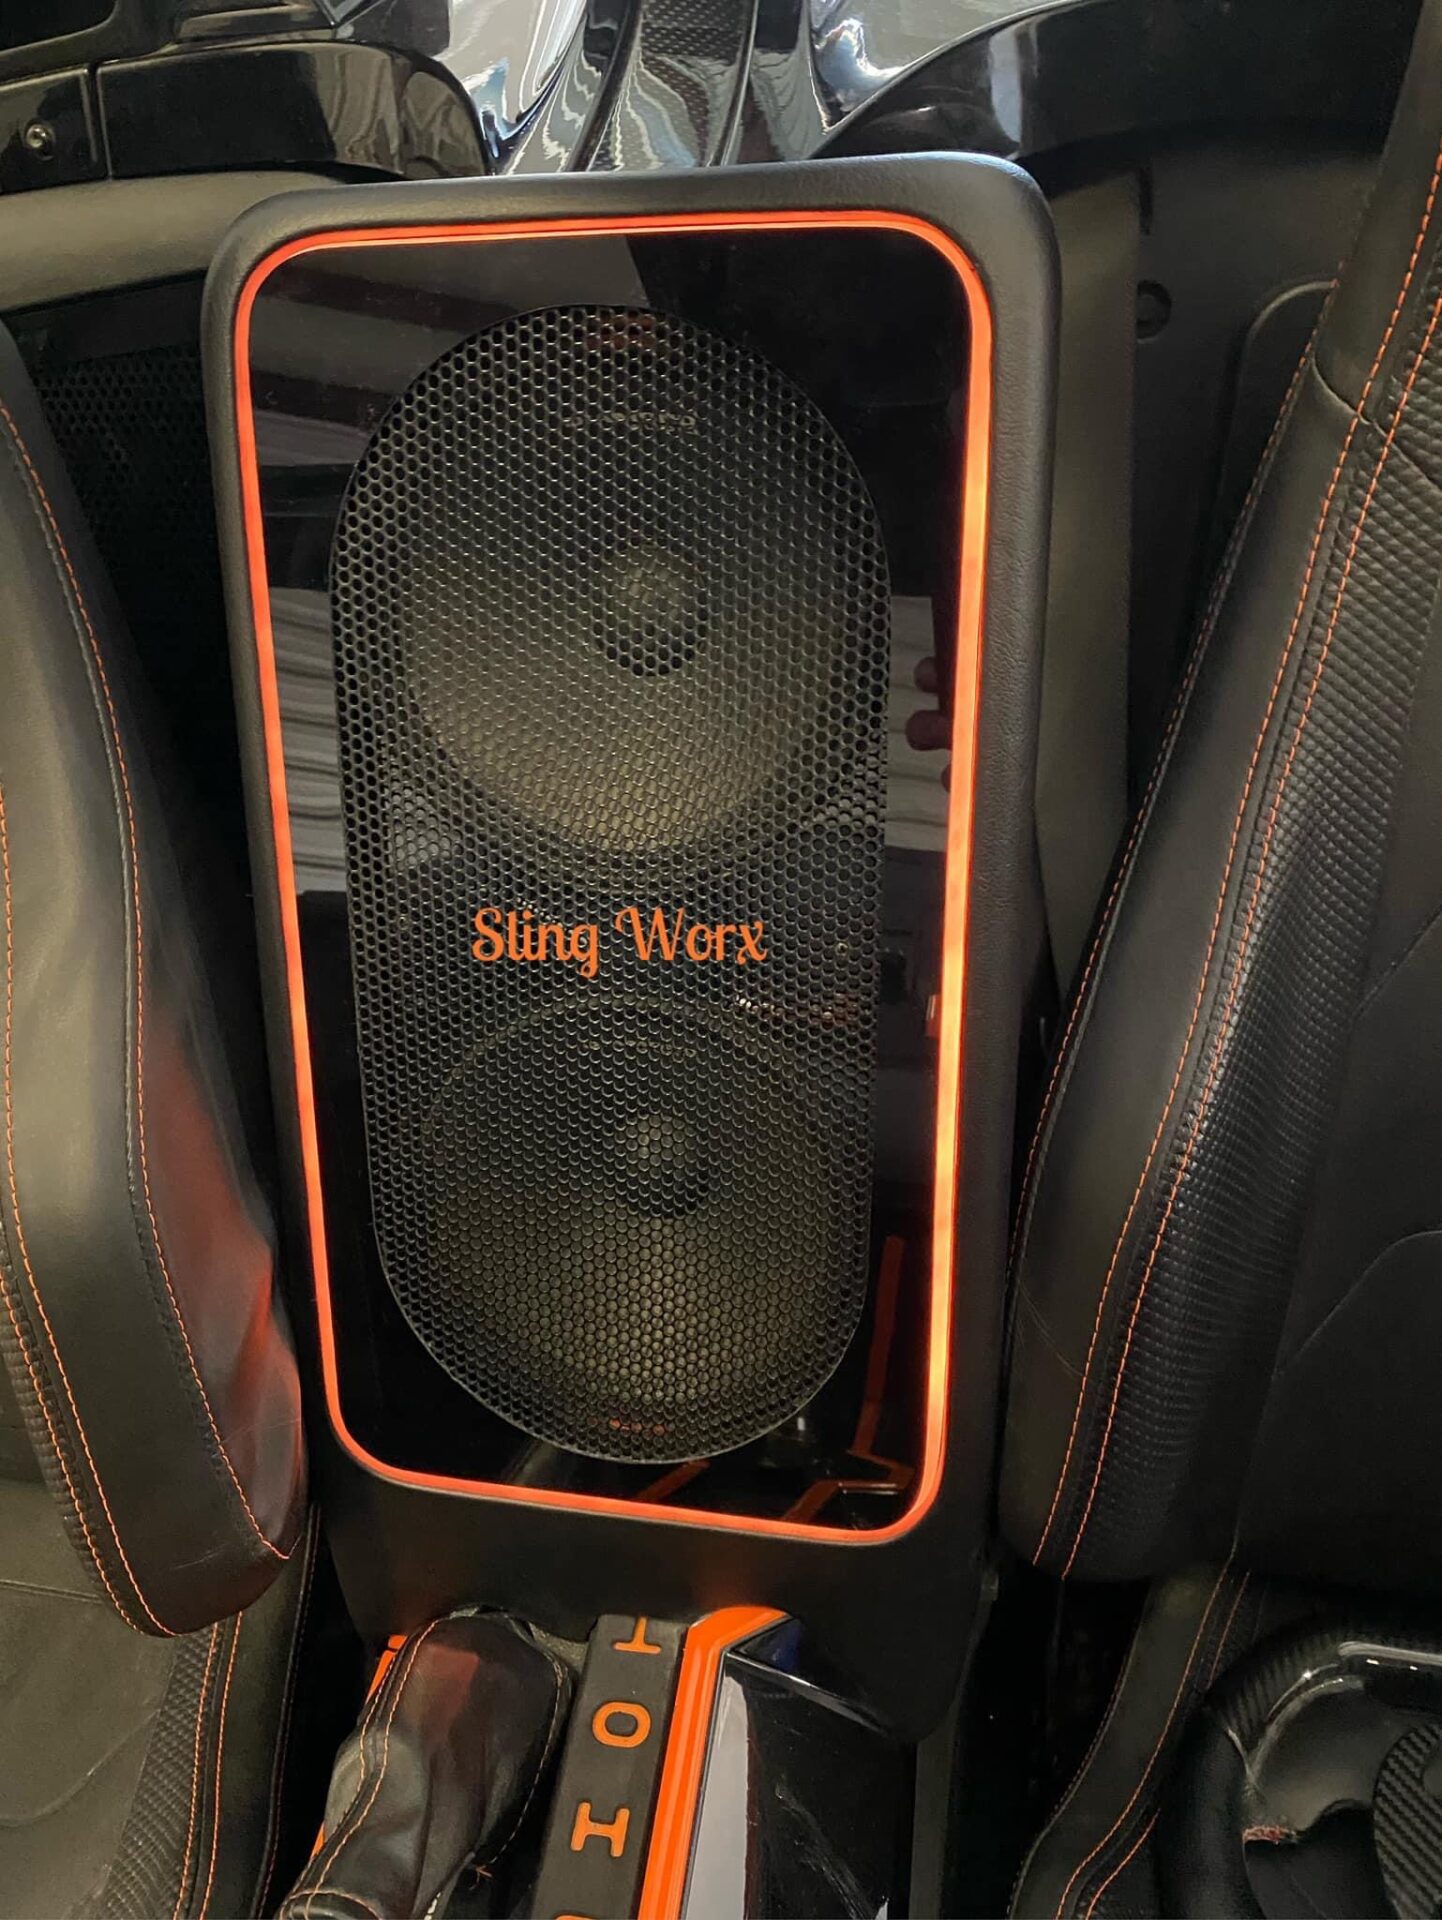 Black and orange Sling Worx speaker